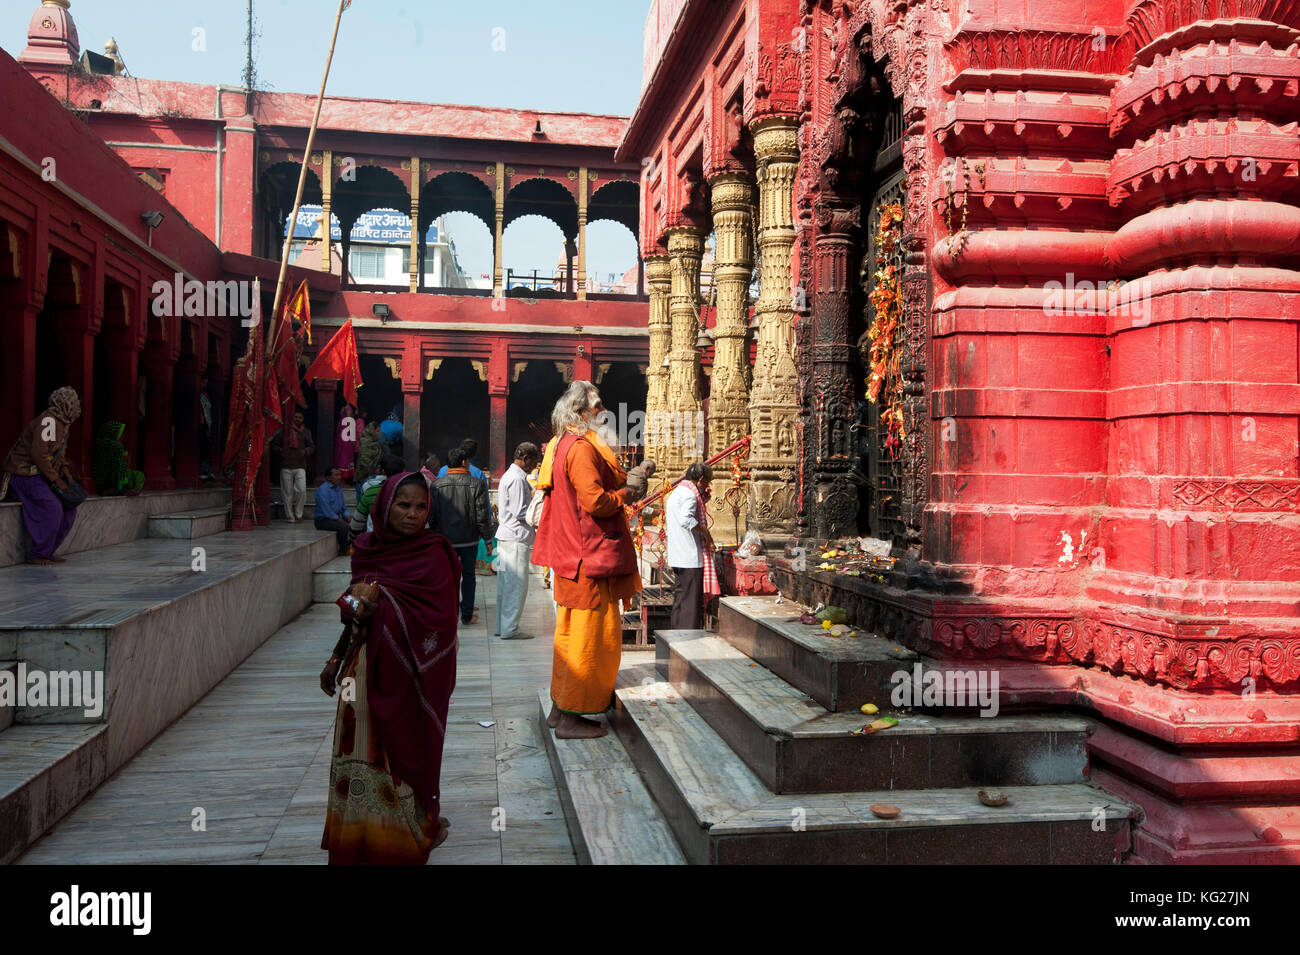 Hindu pilgrim dressed in saffron and red, visiting the Durga Mandir, one of the most famous temples in Varanasi, Uttar Pradesh, India, Asia Stock Photo